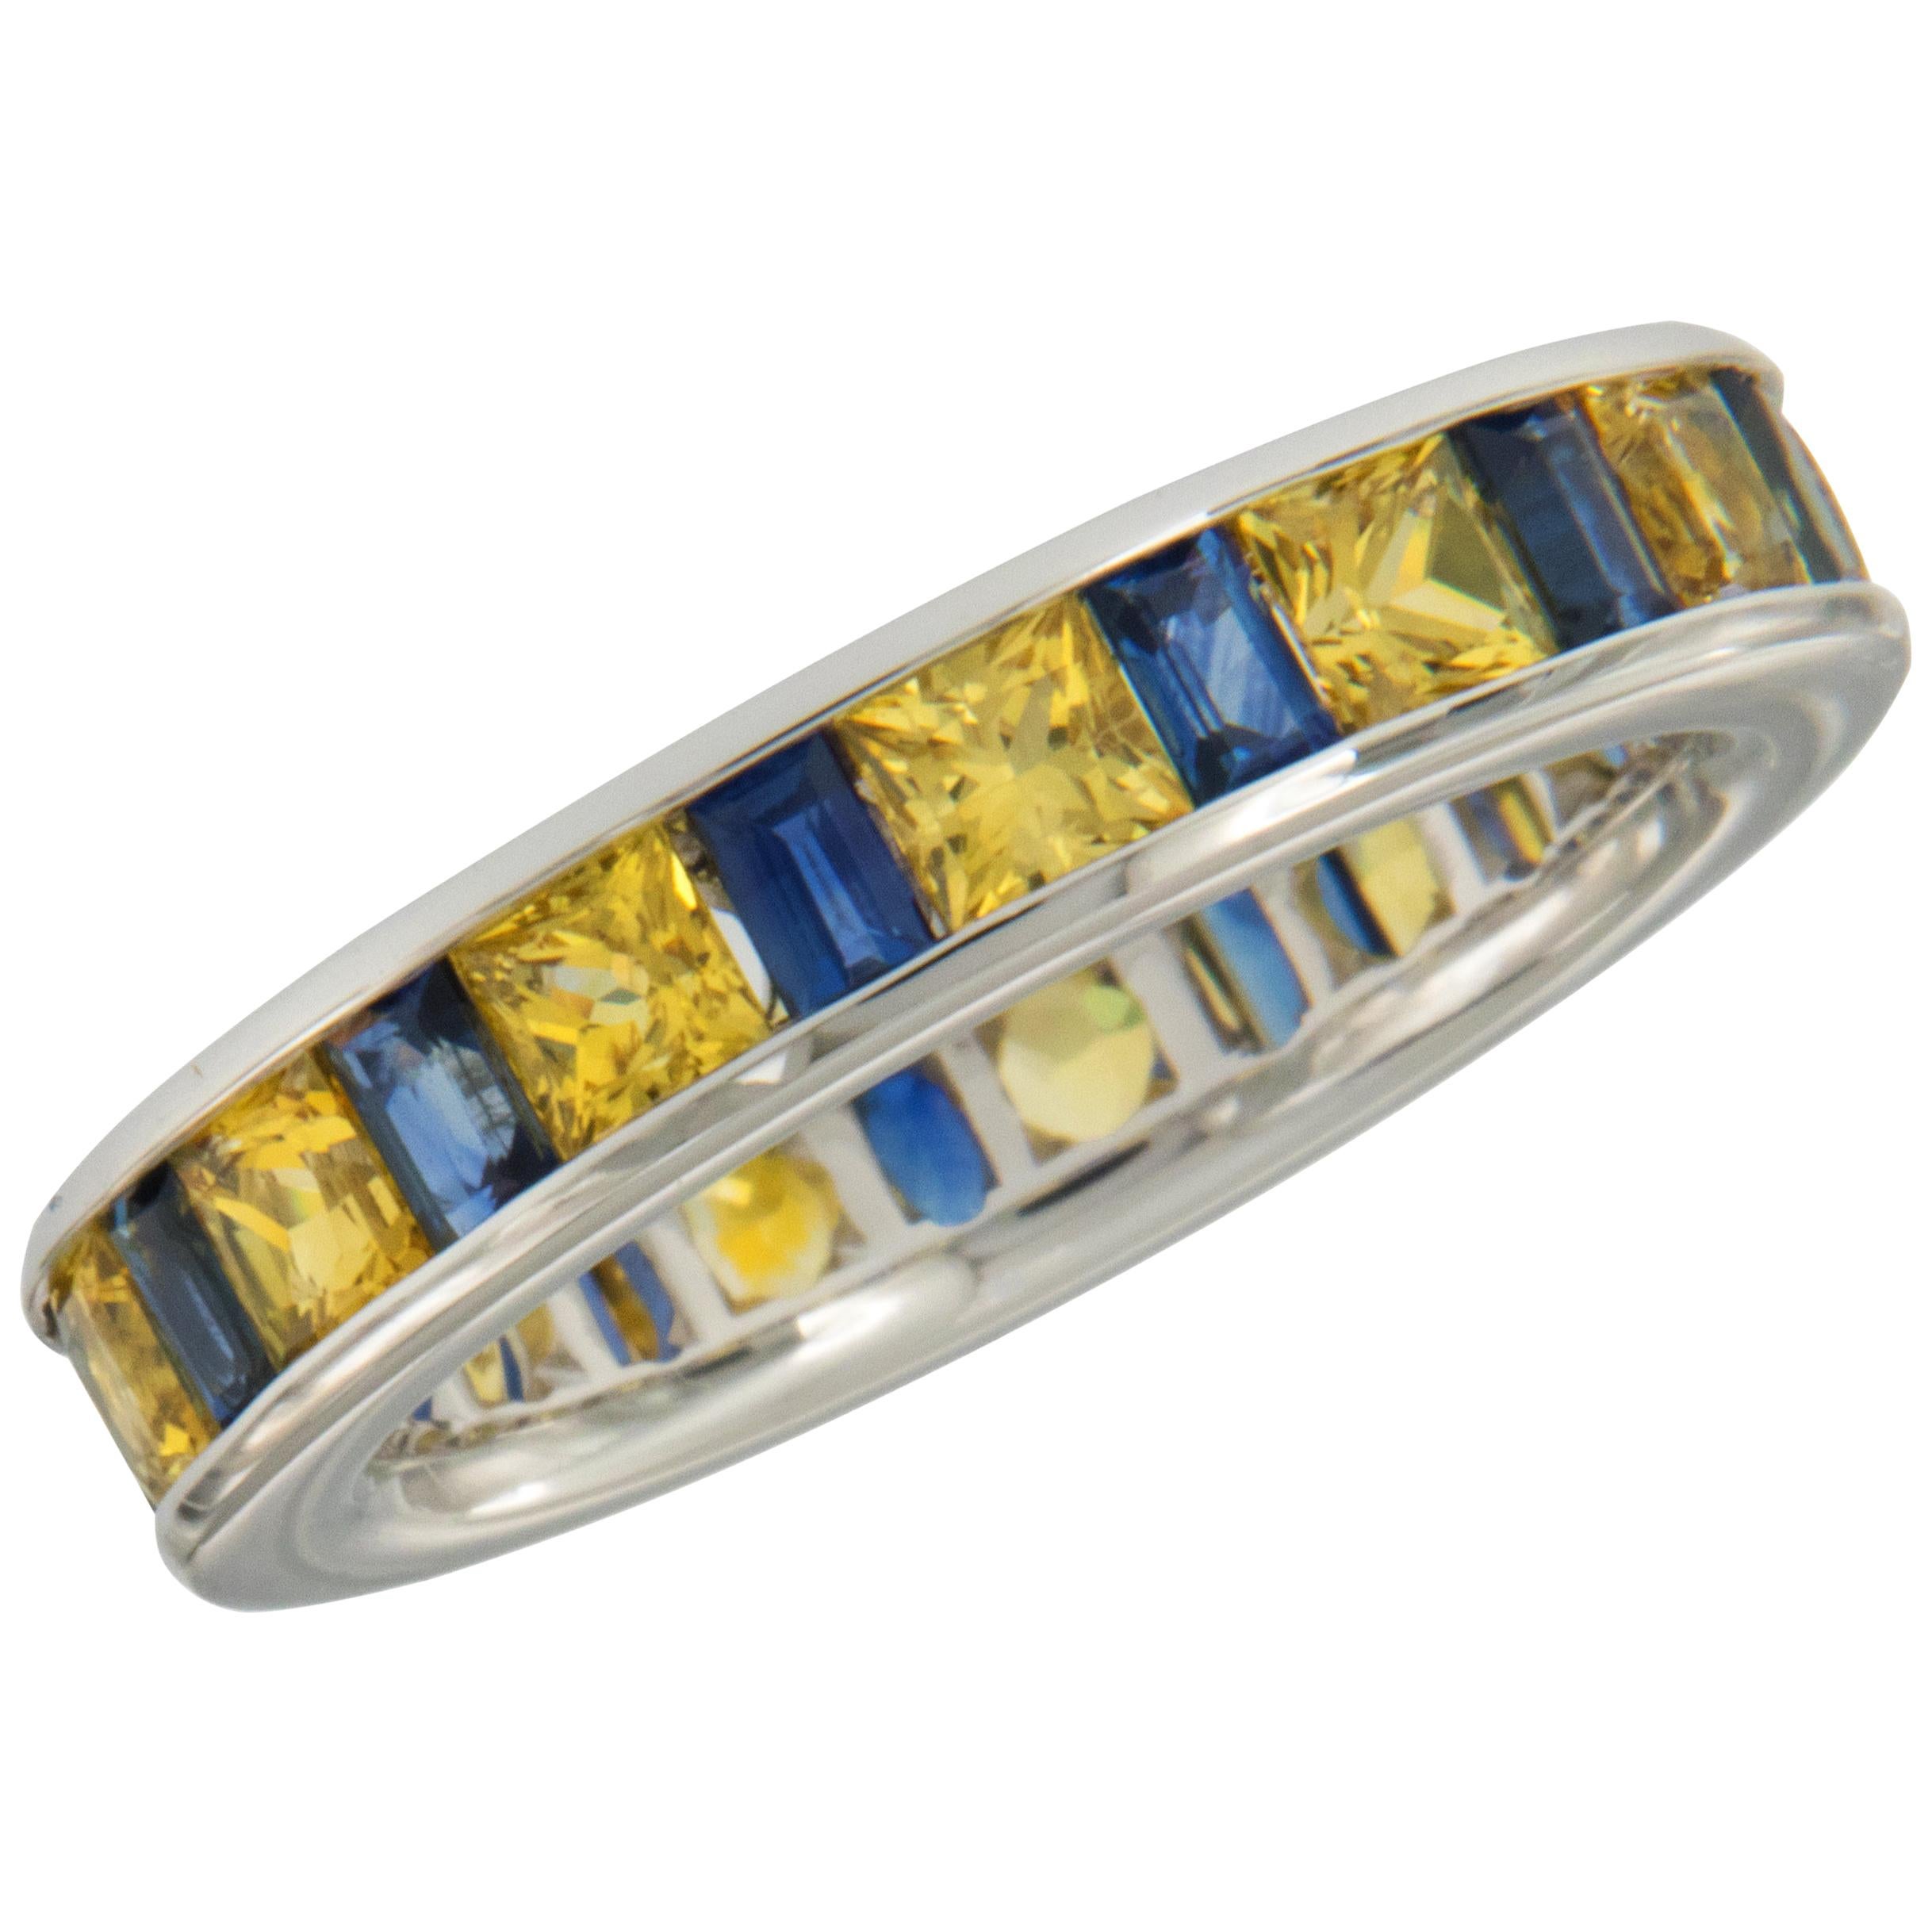 William Rosenberg 18 Karat White Gold Blue & Yellow Sapphire Ring 4.48 Carat TW